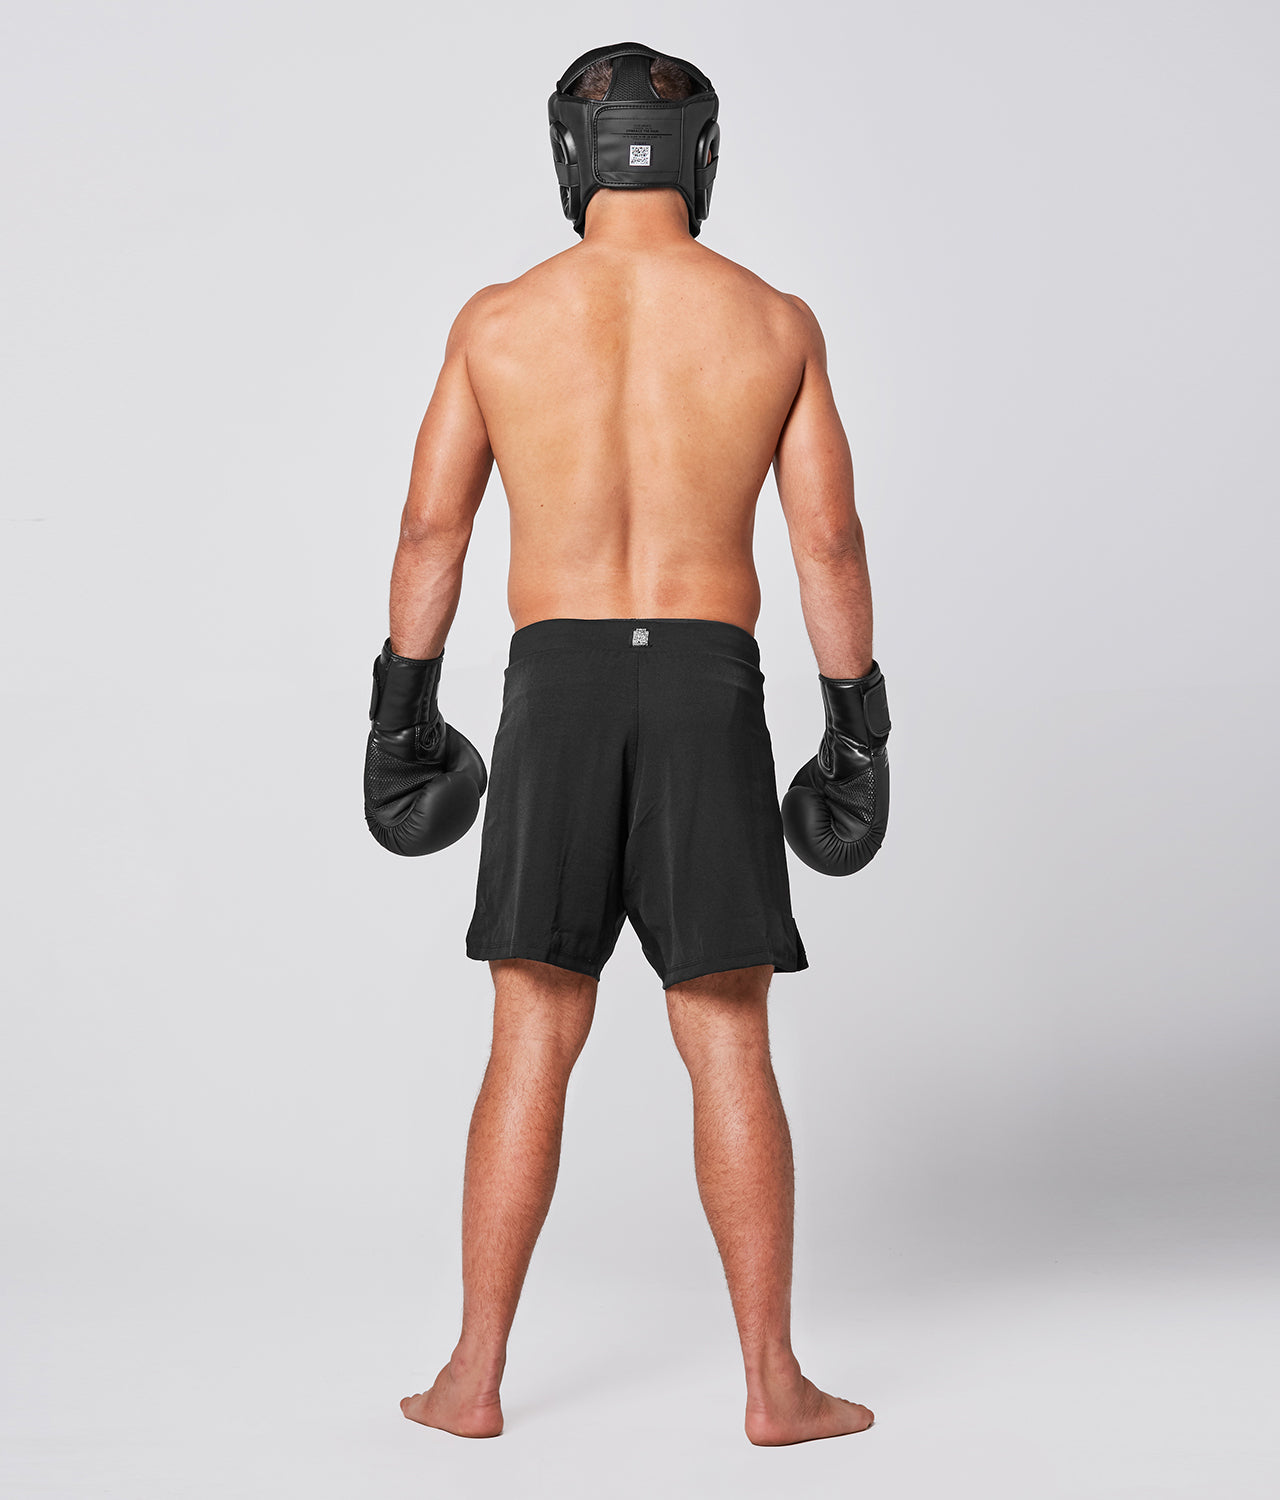 Elite Sports Adults' Essential Black/Black Boxing Headgear